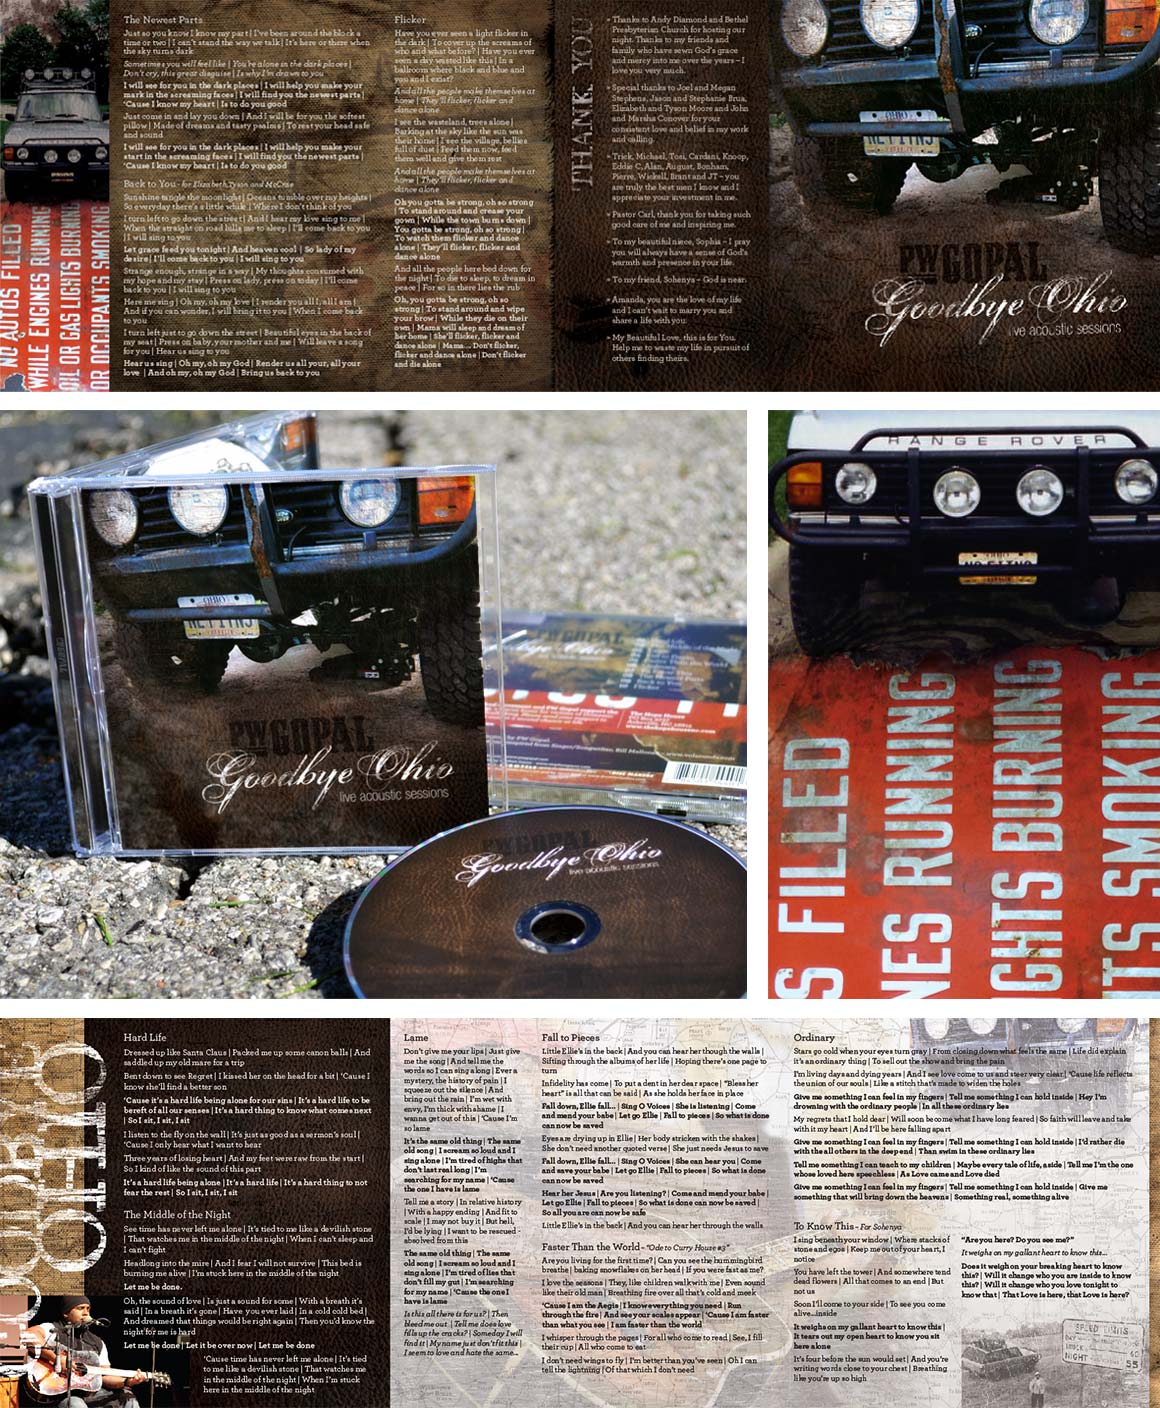 PW Gopal: Goodbye Ohio CD Packaging Design